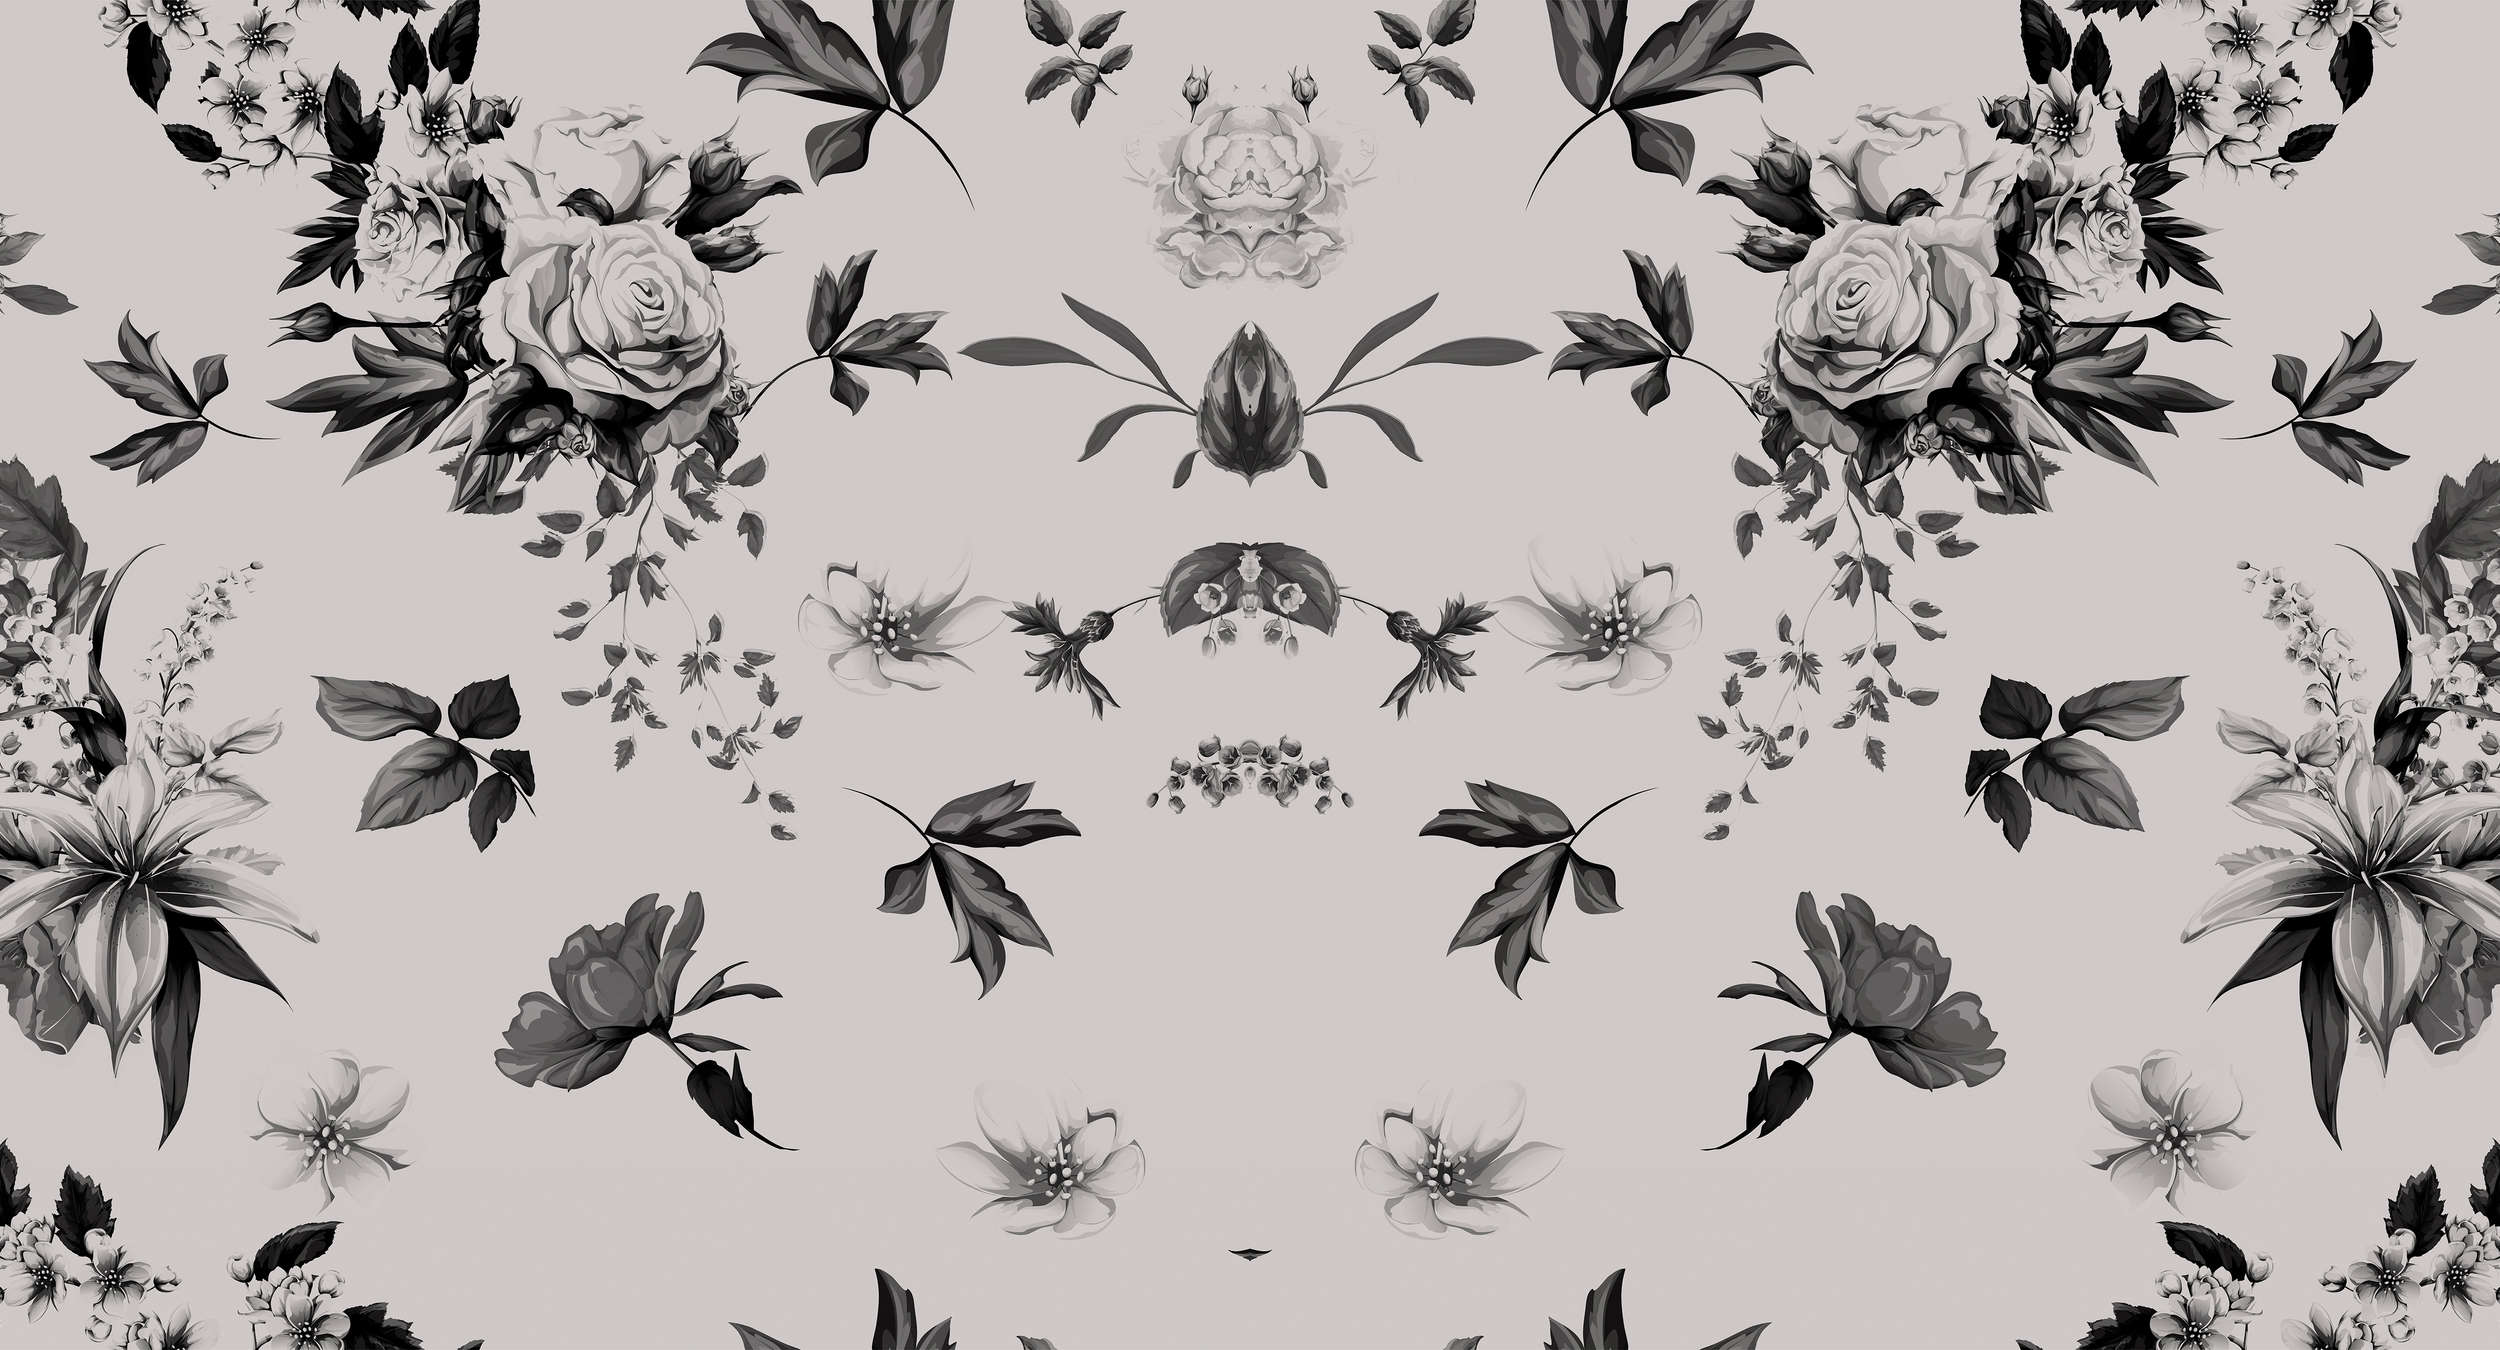             Photo wallpaper roses & flowers design mirrored - grey, black
        